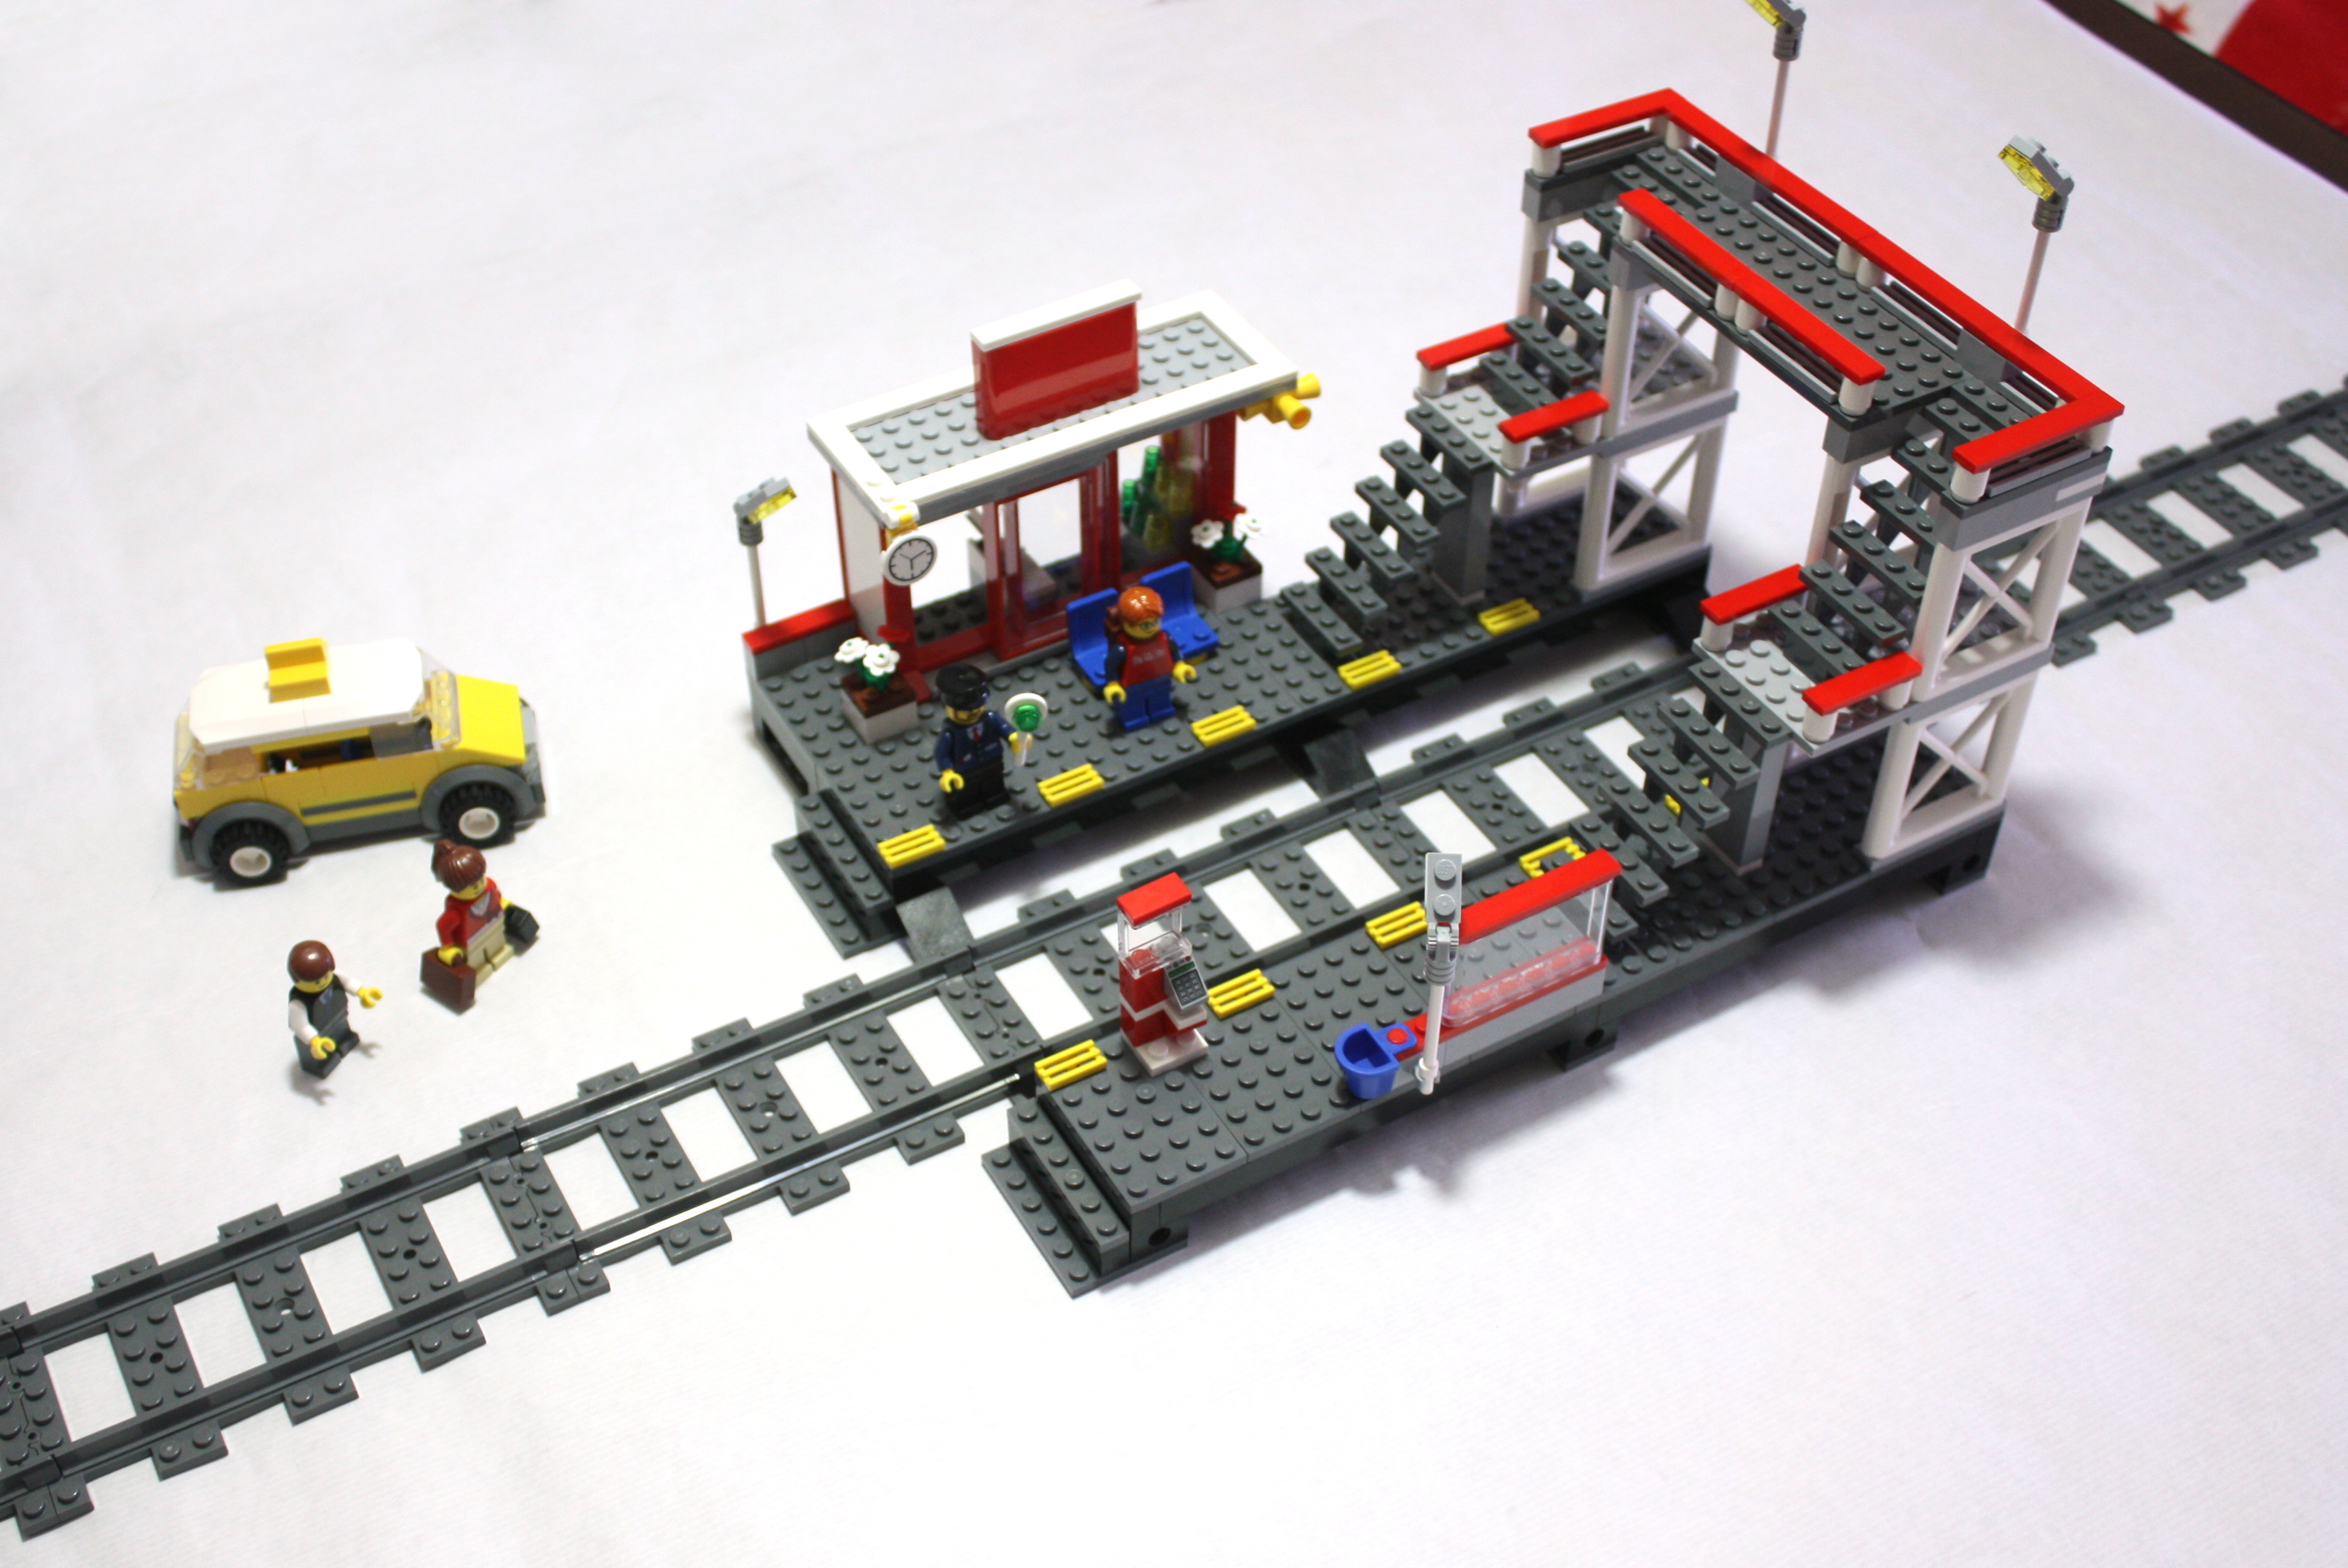 LEGO 7937 Train Review - LEGO & Videos